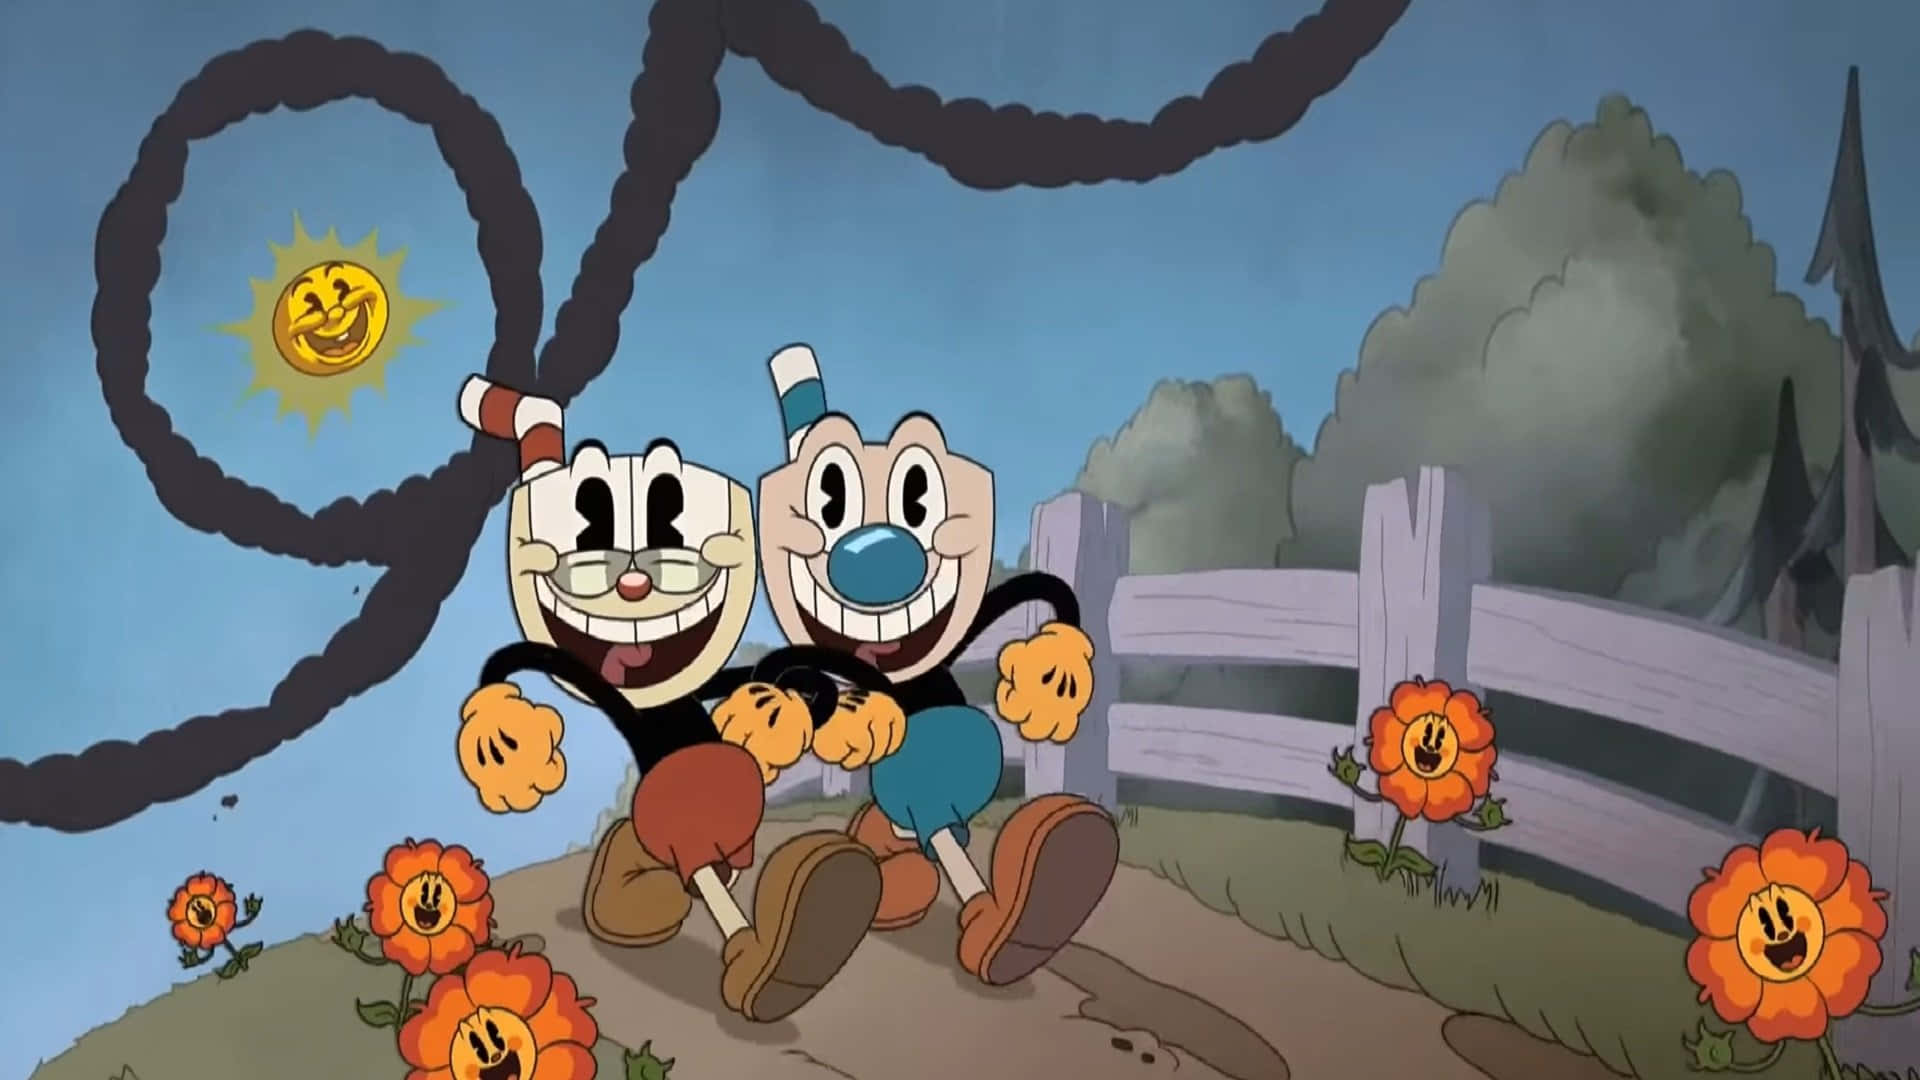 A Cartoon Of Two Cartoon Characters Running Through A Field